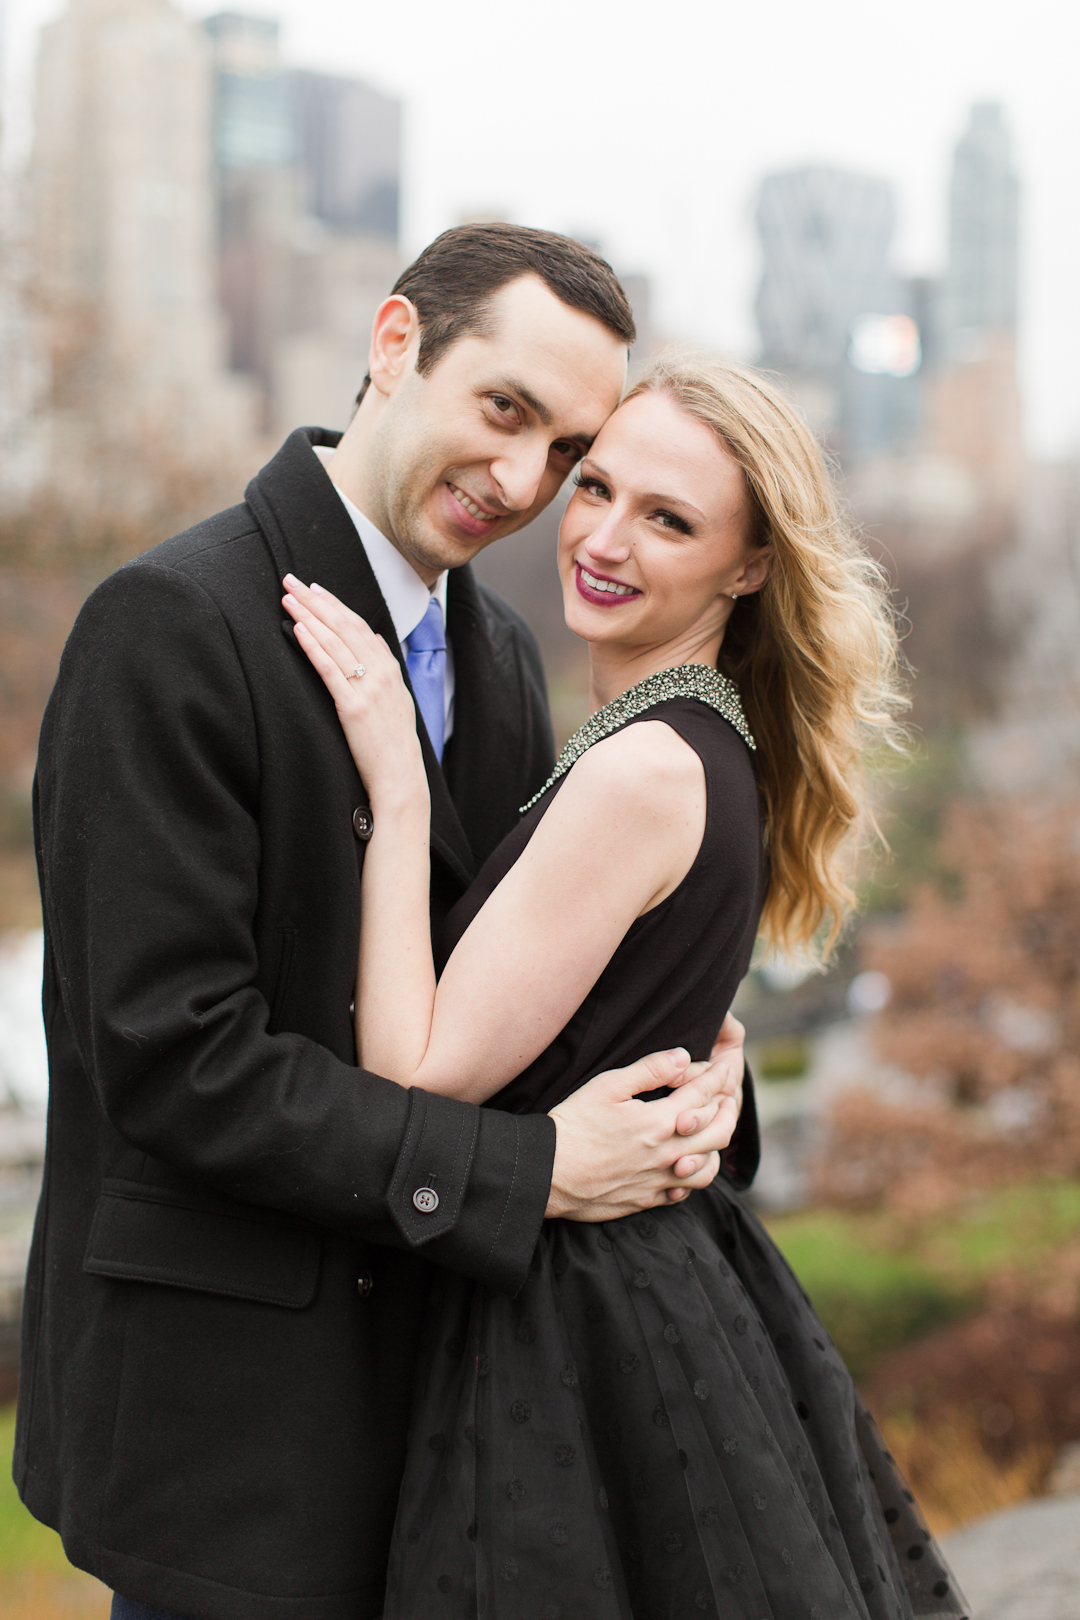 Melissa Kruse Photography - Jenna & Evan Central Park NYC Engagement Photos-60.jpg